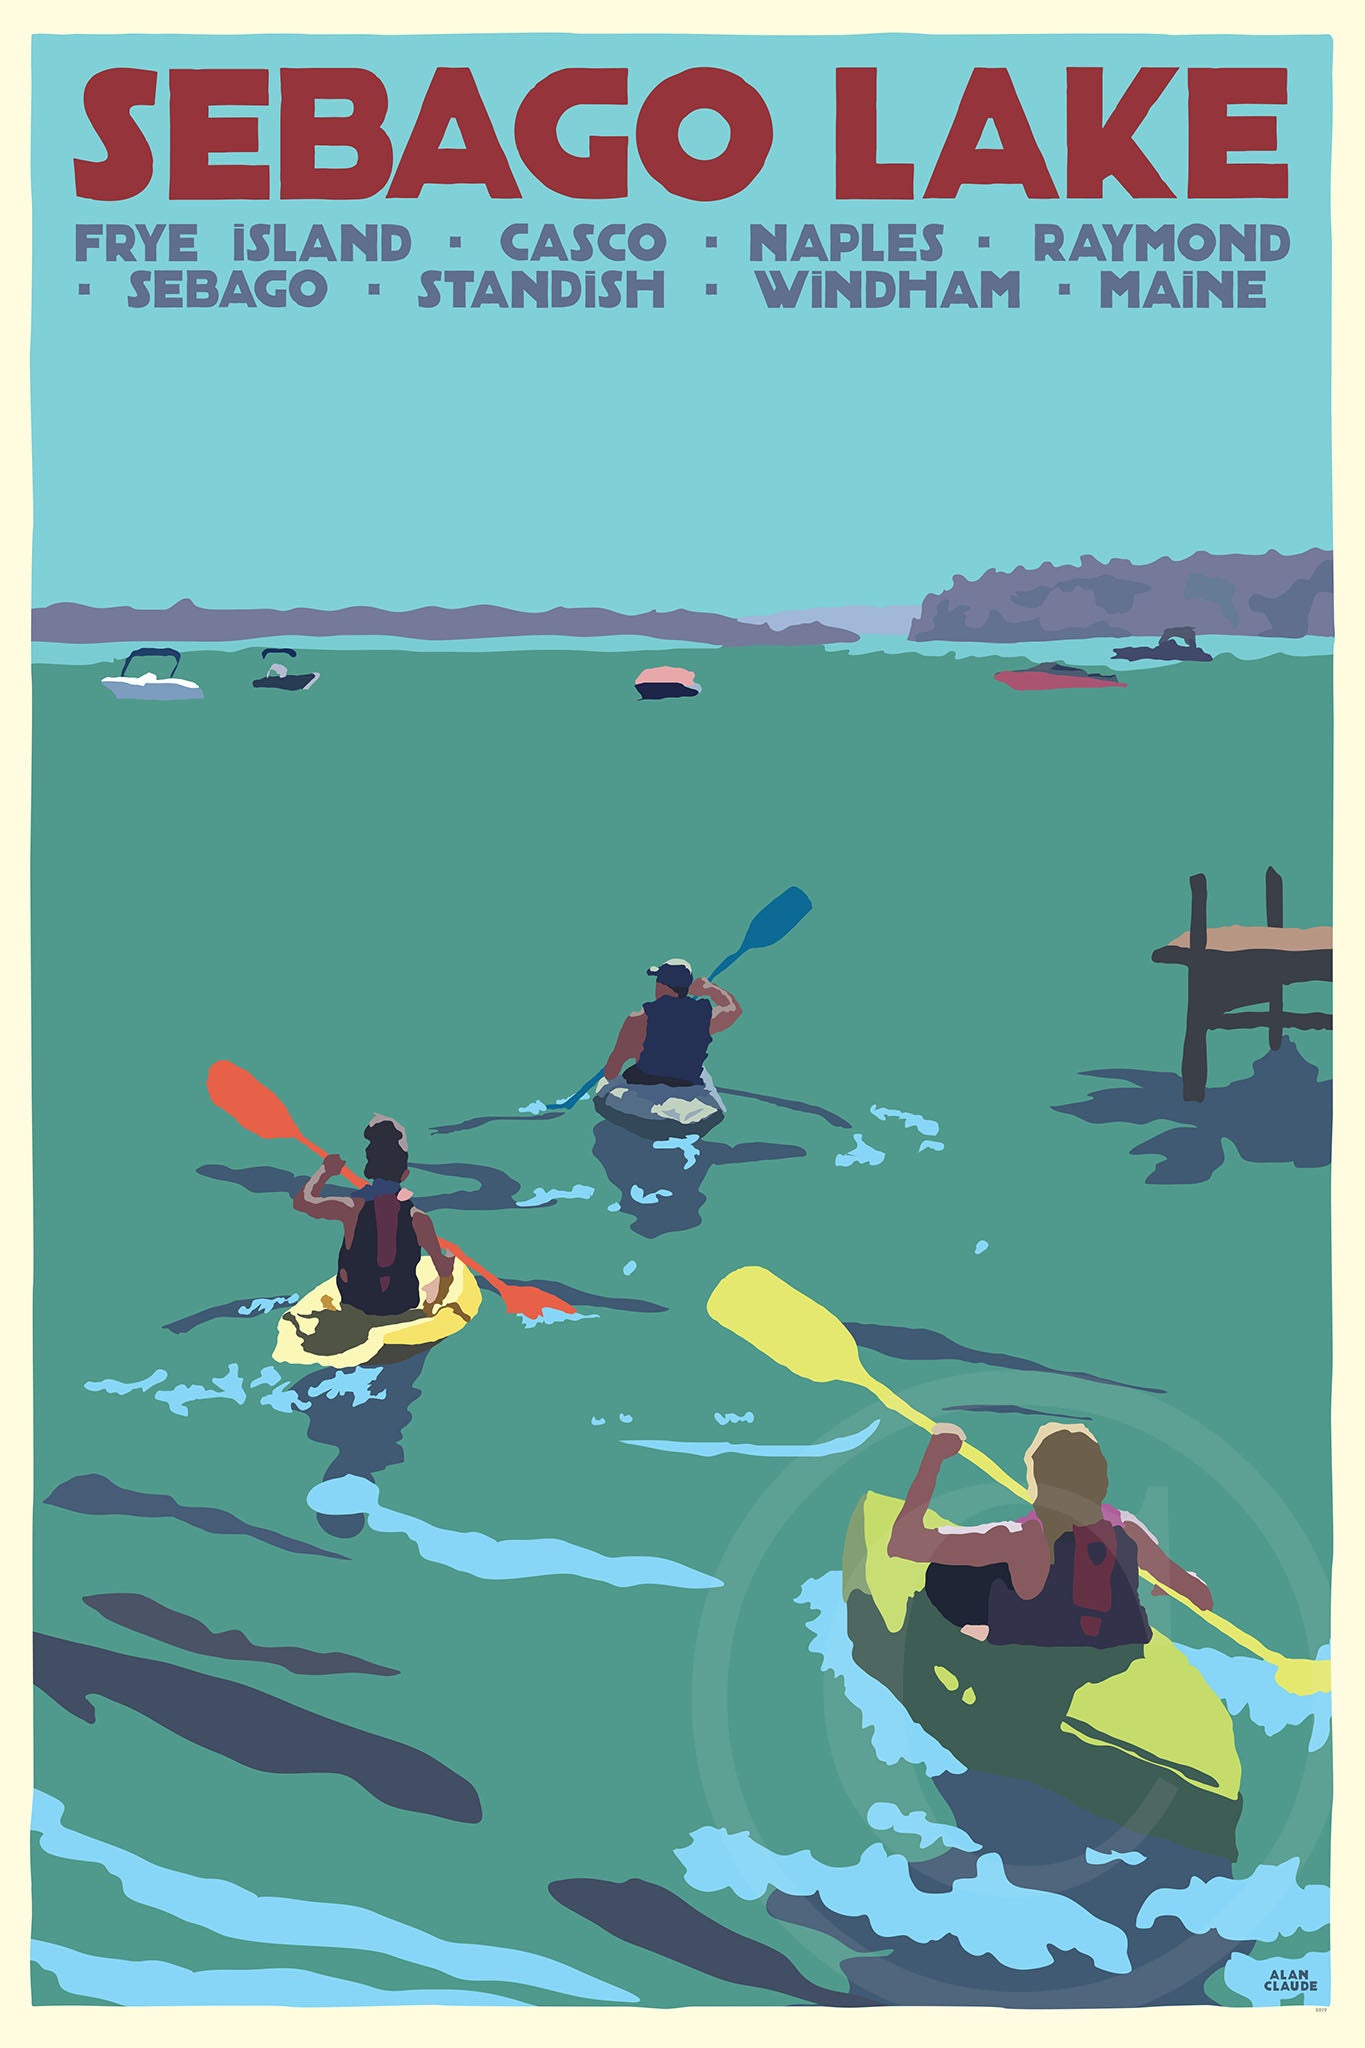 Sebago Lake kayakers Art Print 24" x 36" Travel Poster By Alan Claude - Maine